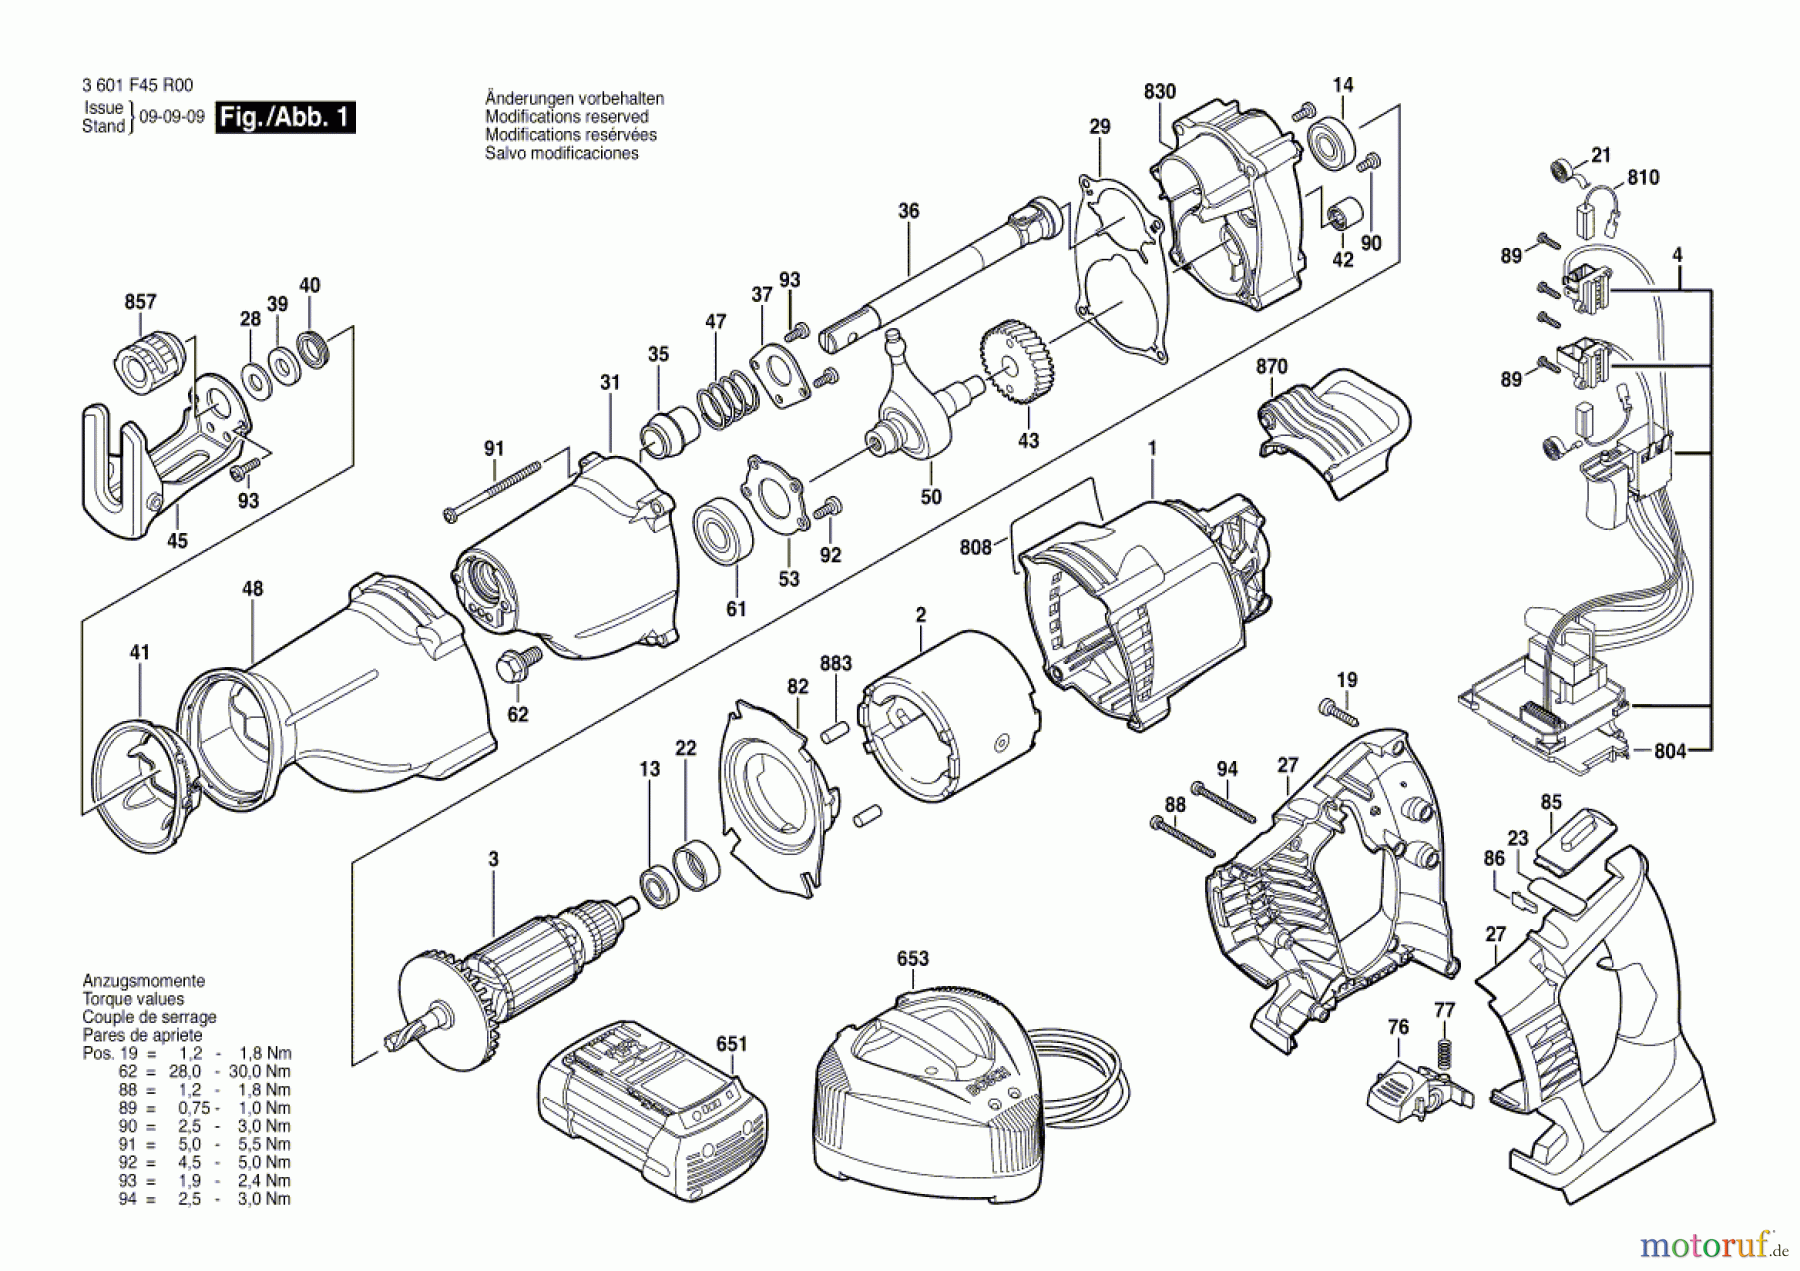  Bosch Akku Werkzeug Akku-Säbelsäge GSA 36 V-LI Seite 1